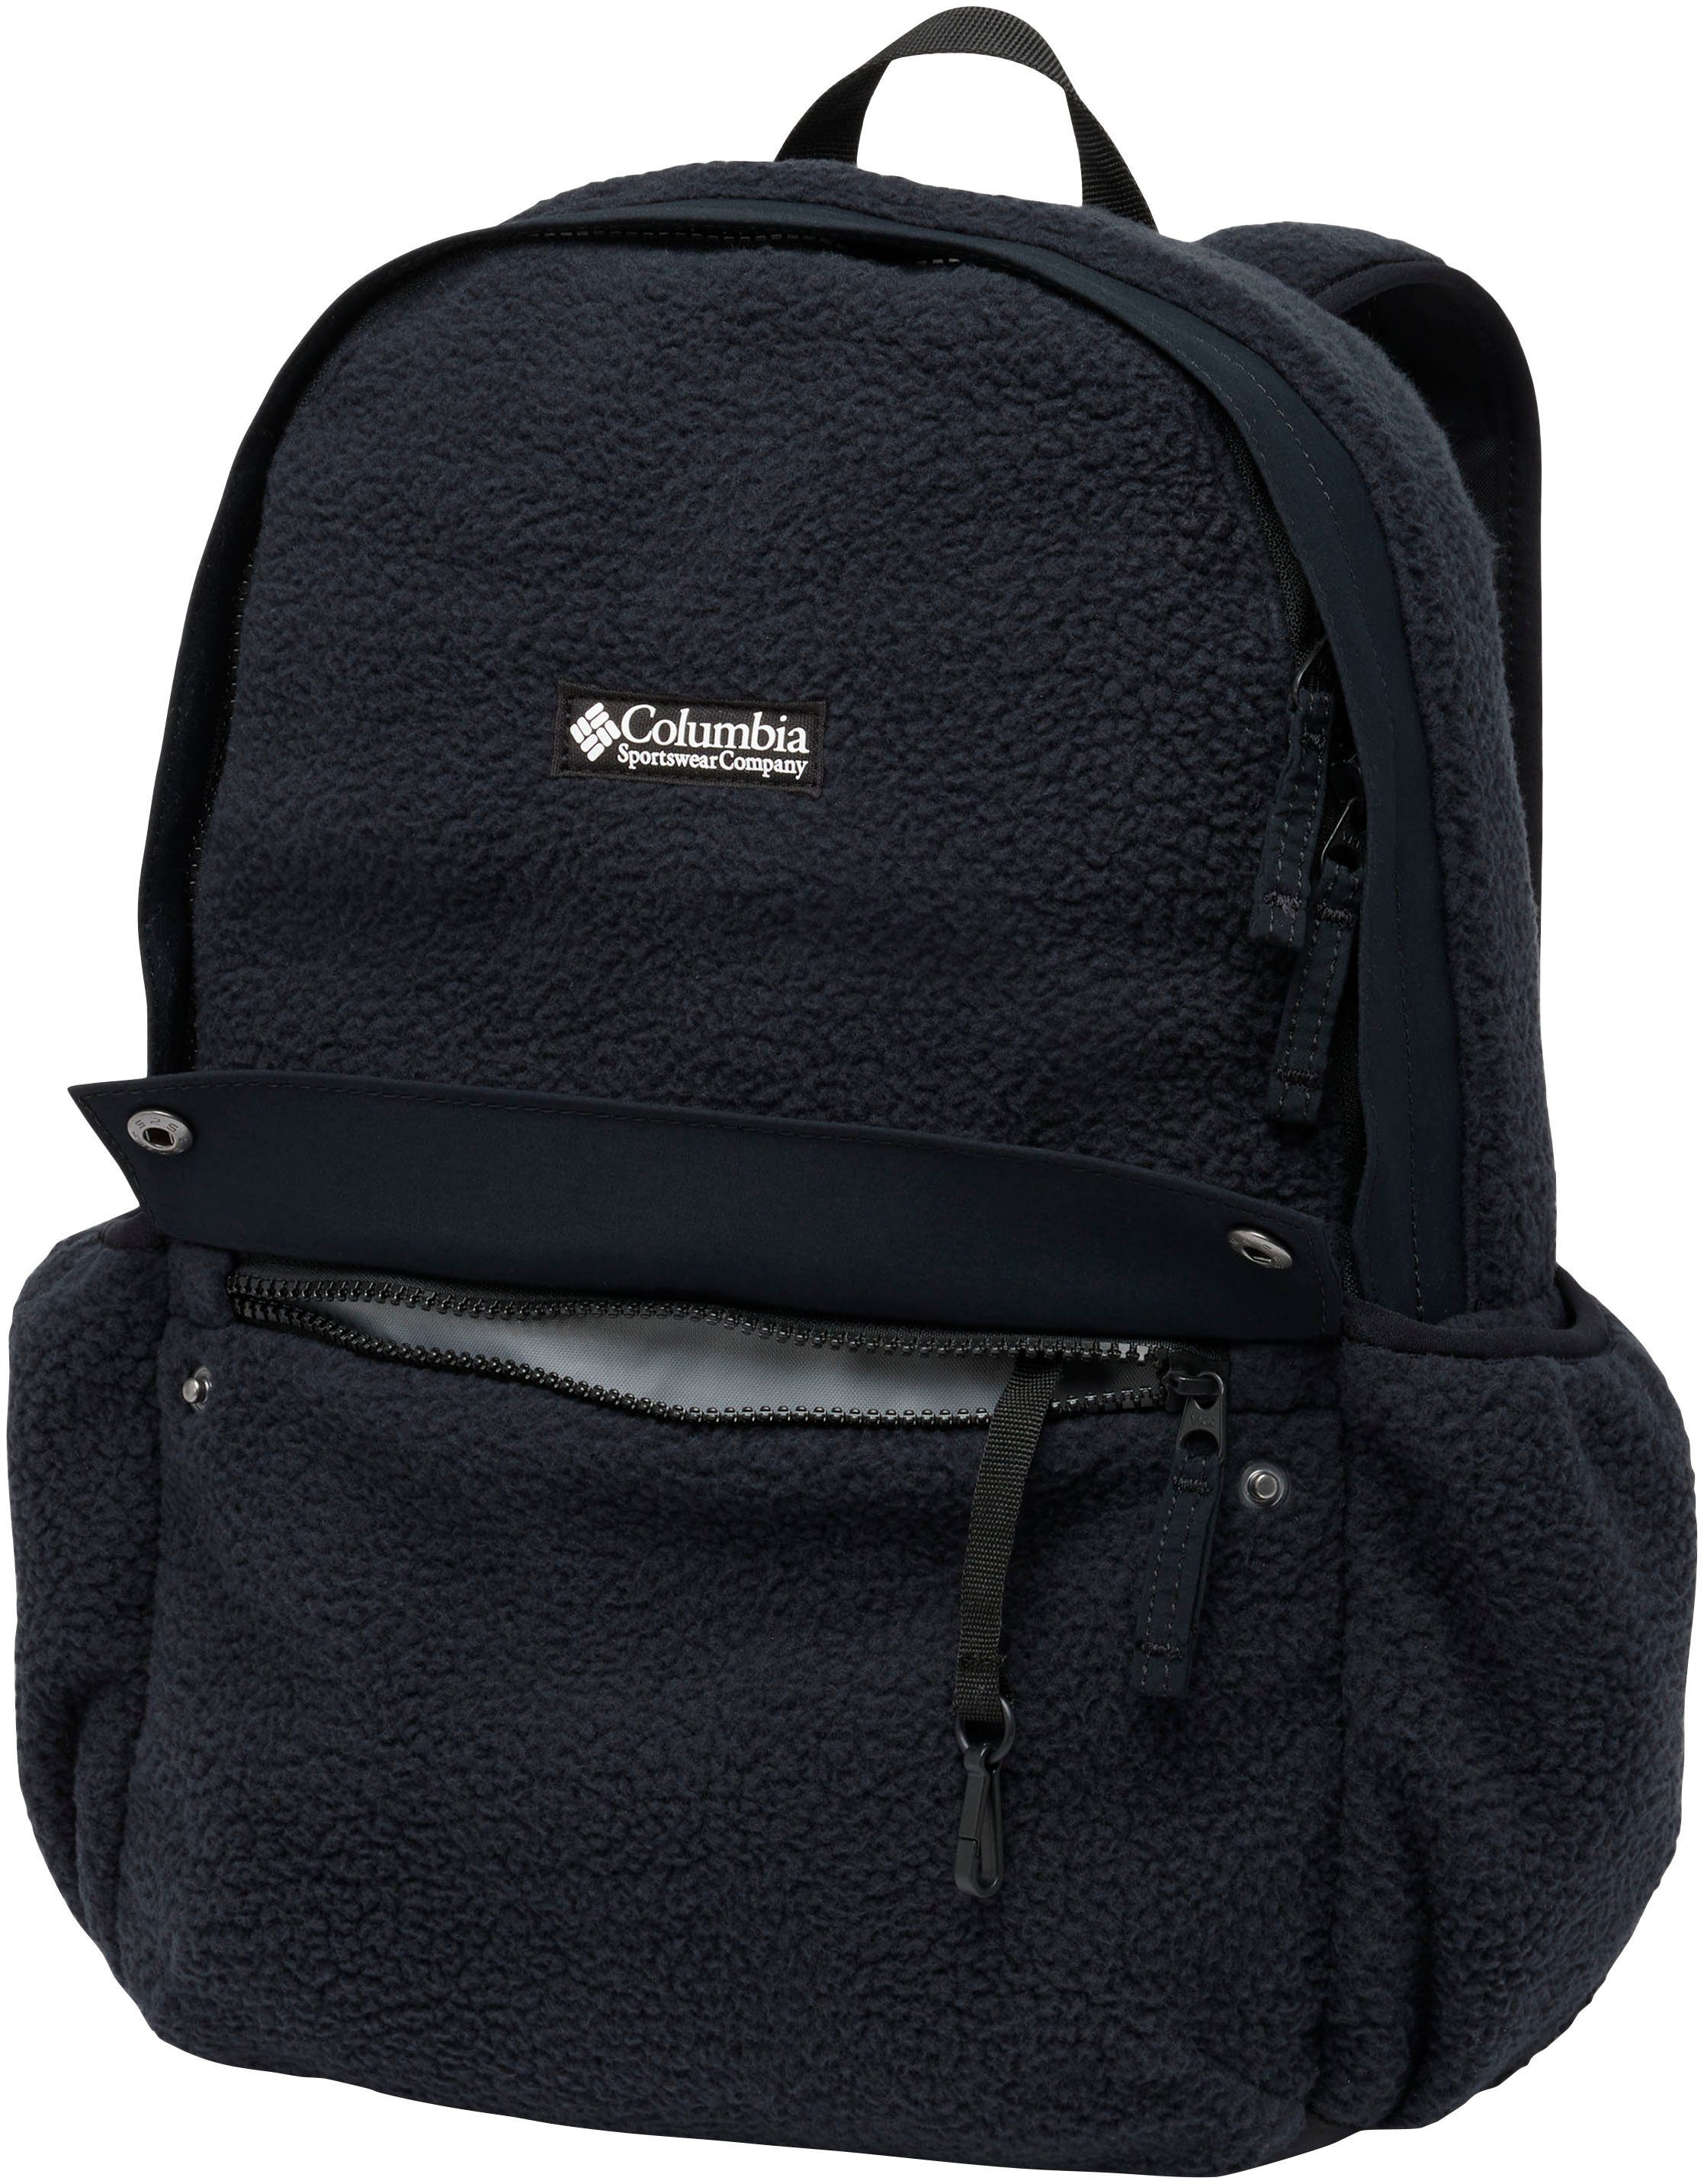 Backpack Black Helvetia Columbia Rucksack 14L